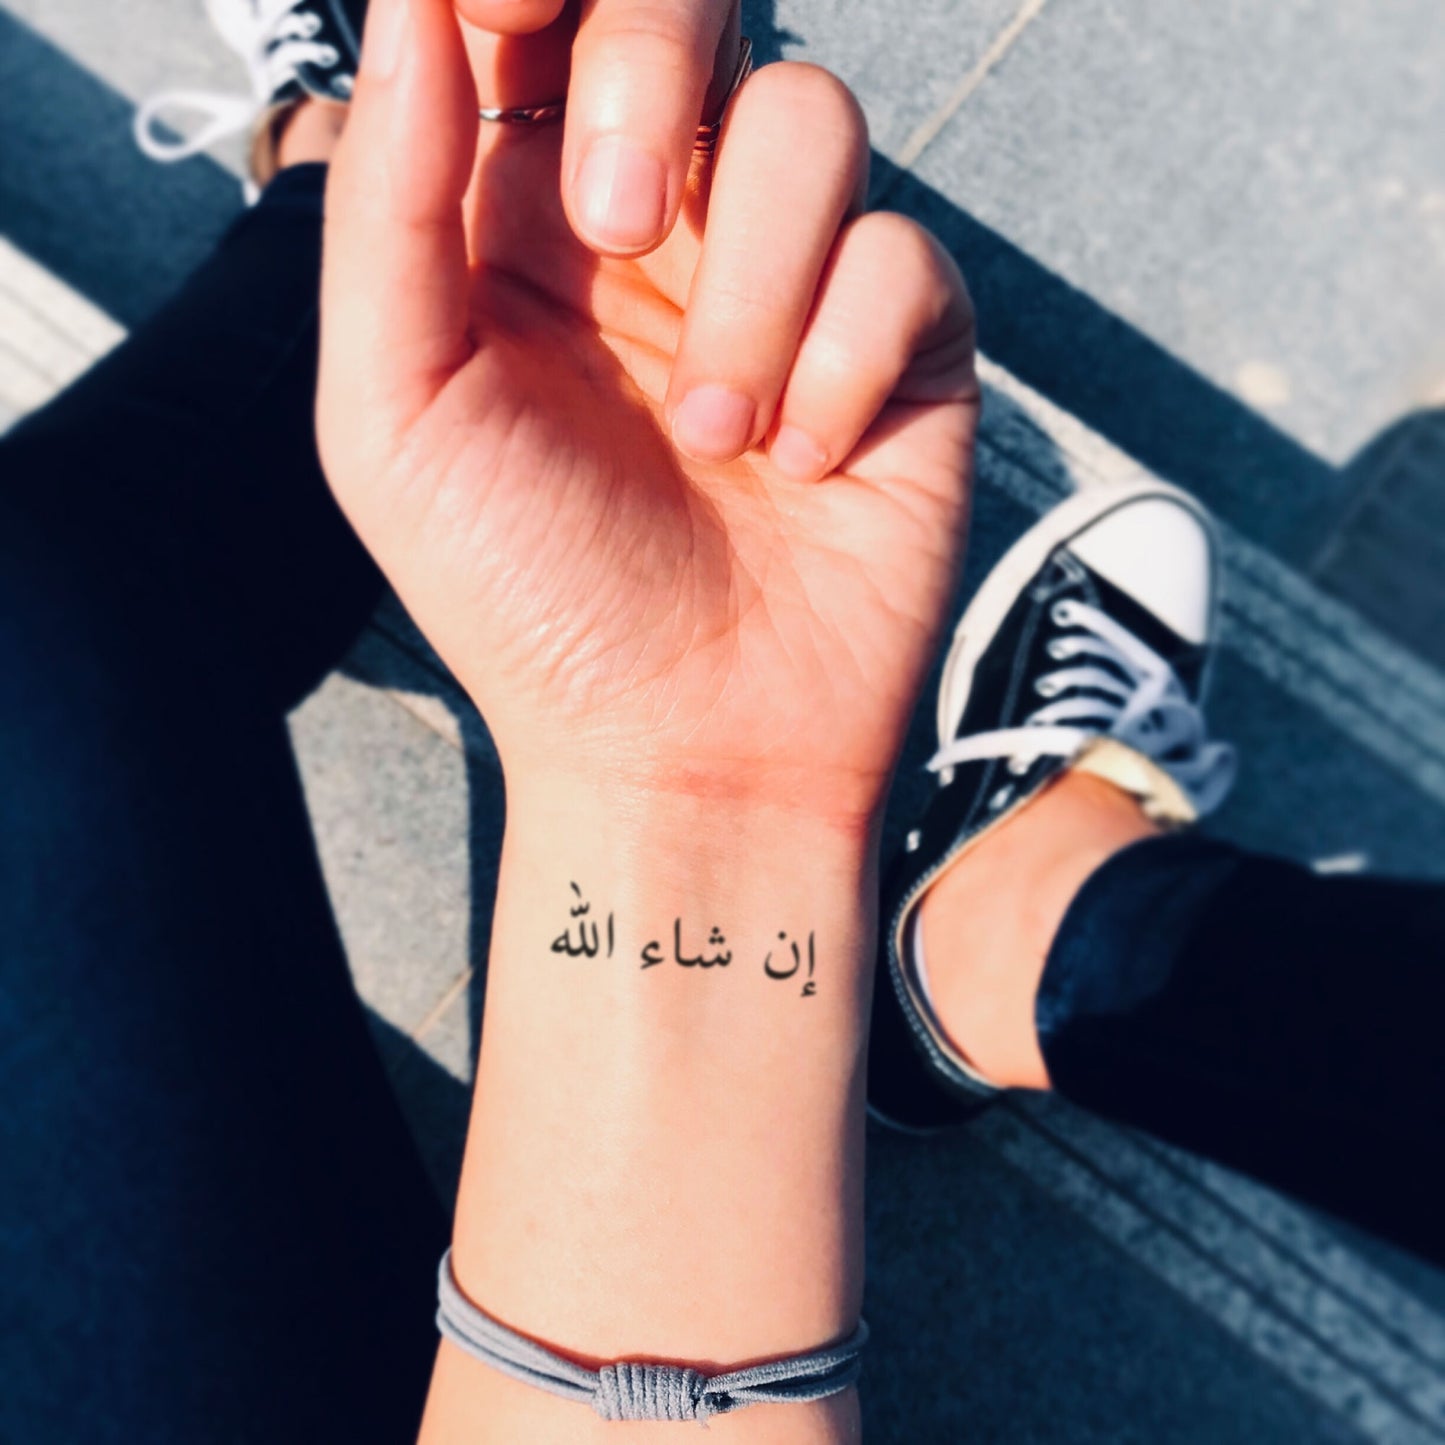 fake small inshallah - god willing in arabic word lettering temporary tattoo sticker design idea on wrist